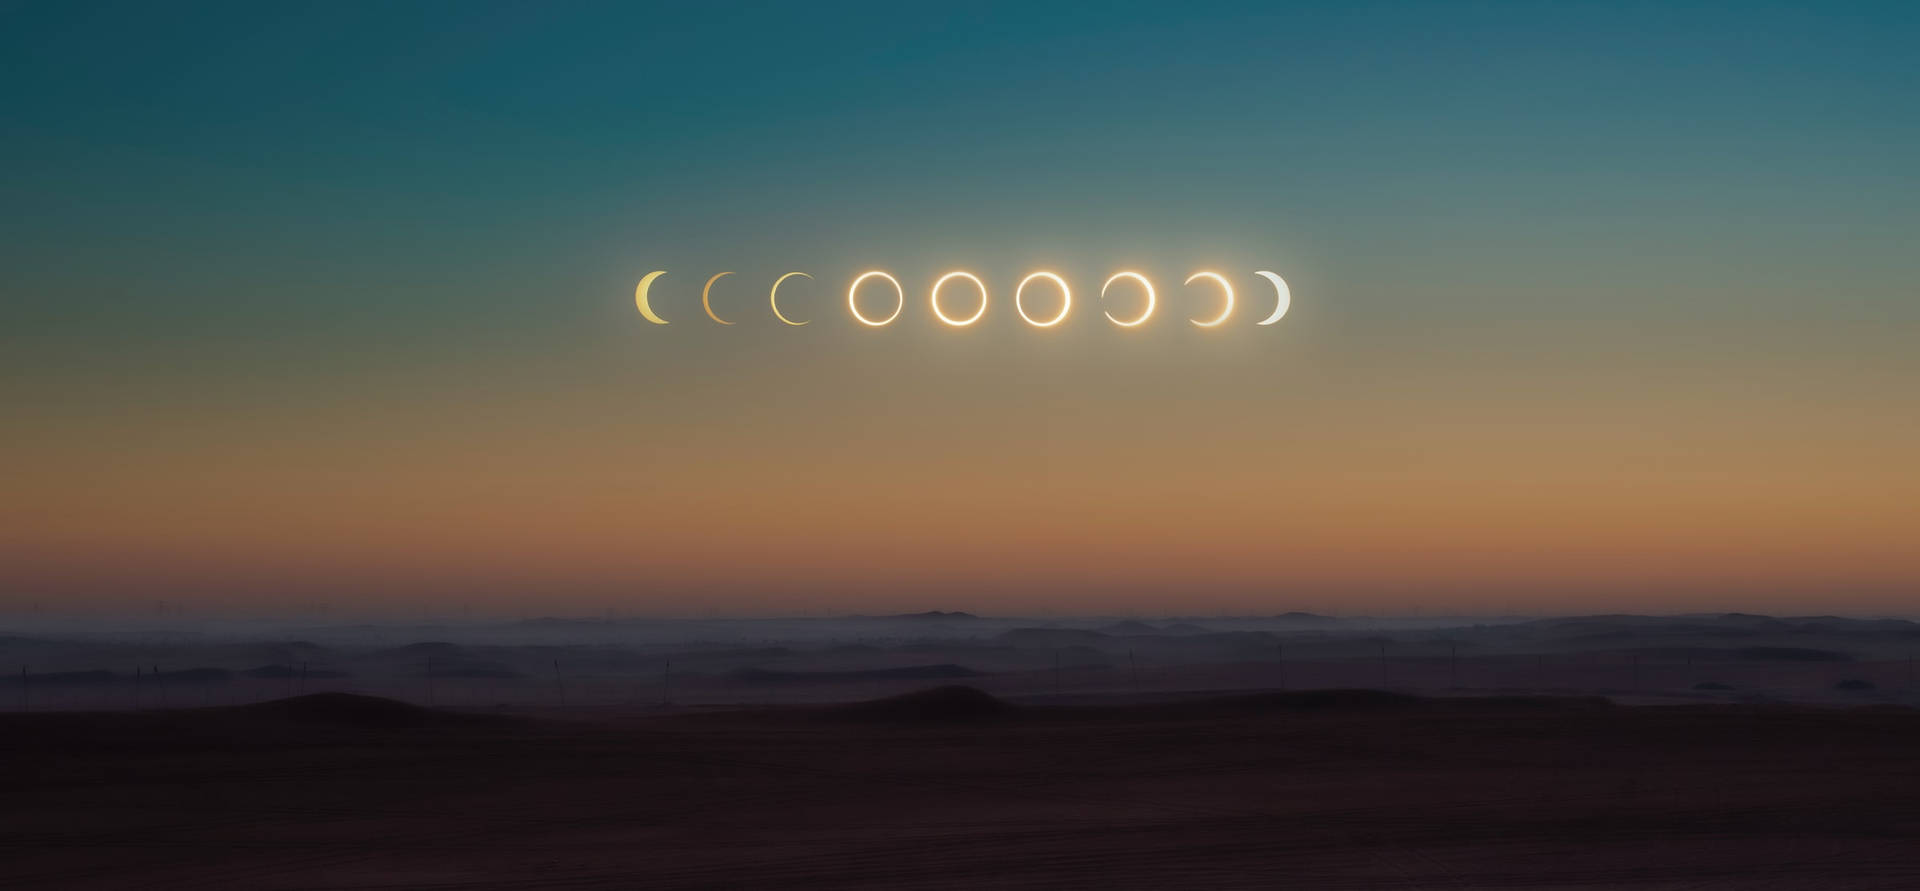 Luna Eclipse Phases Digital Art Background